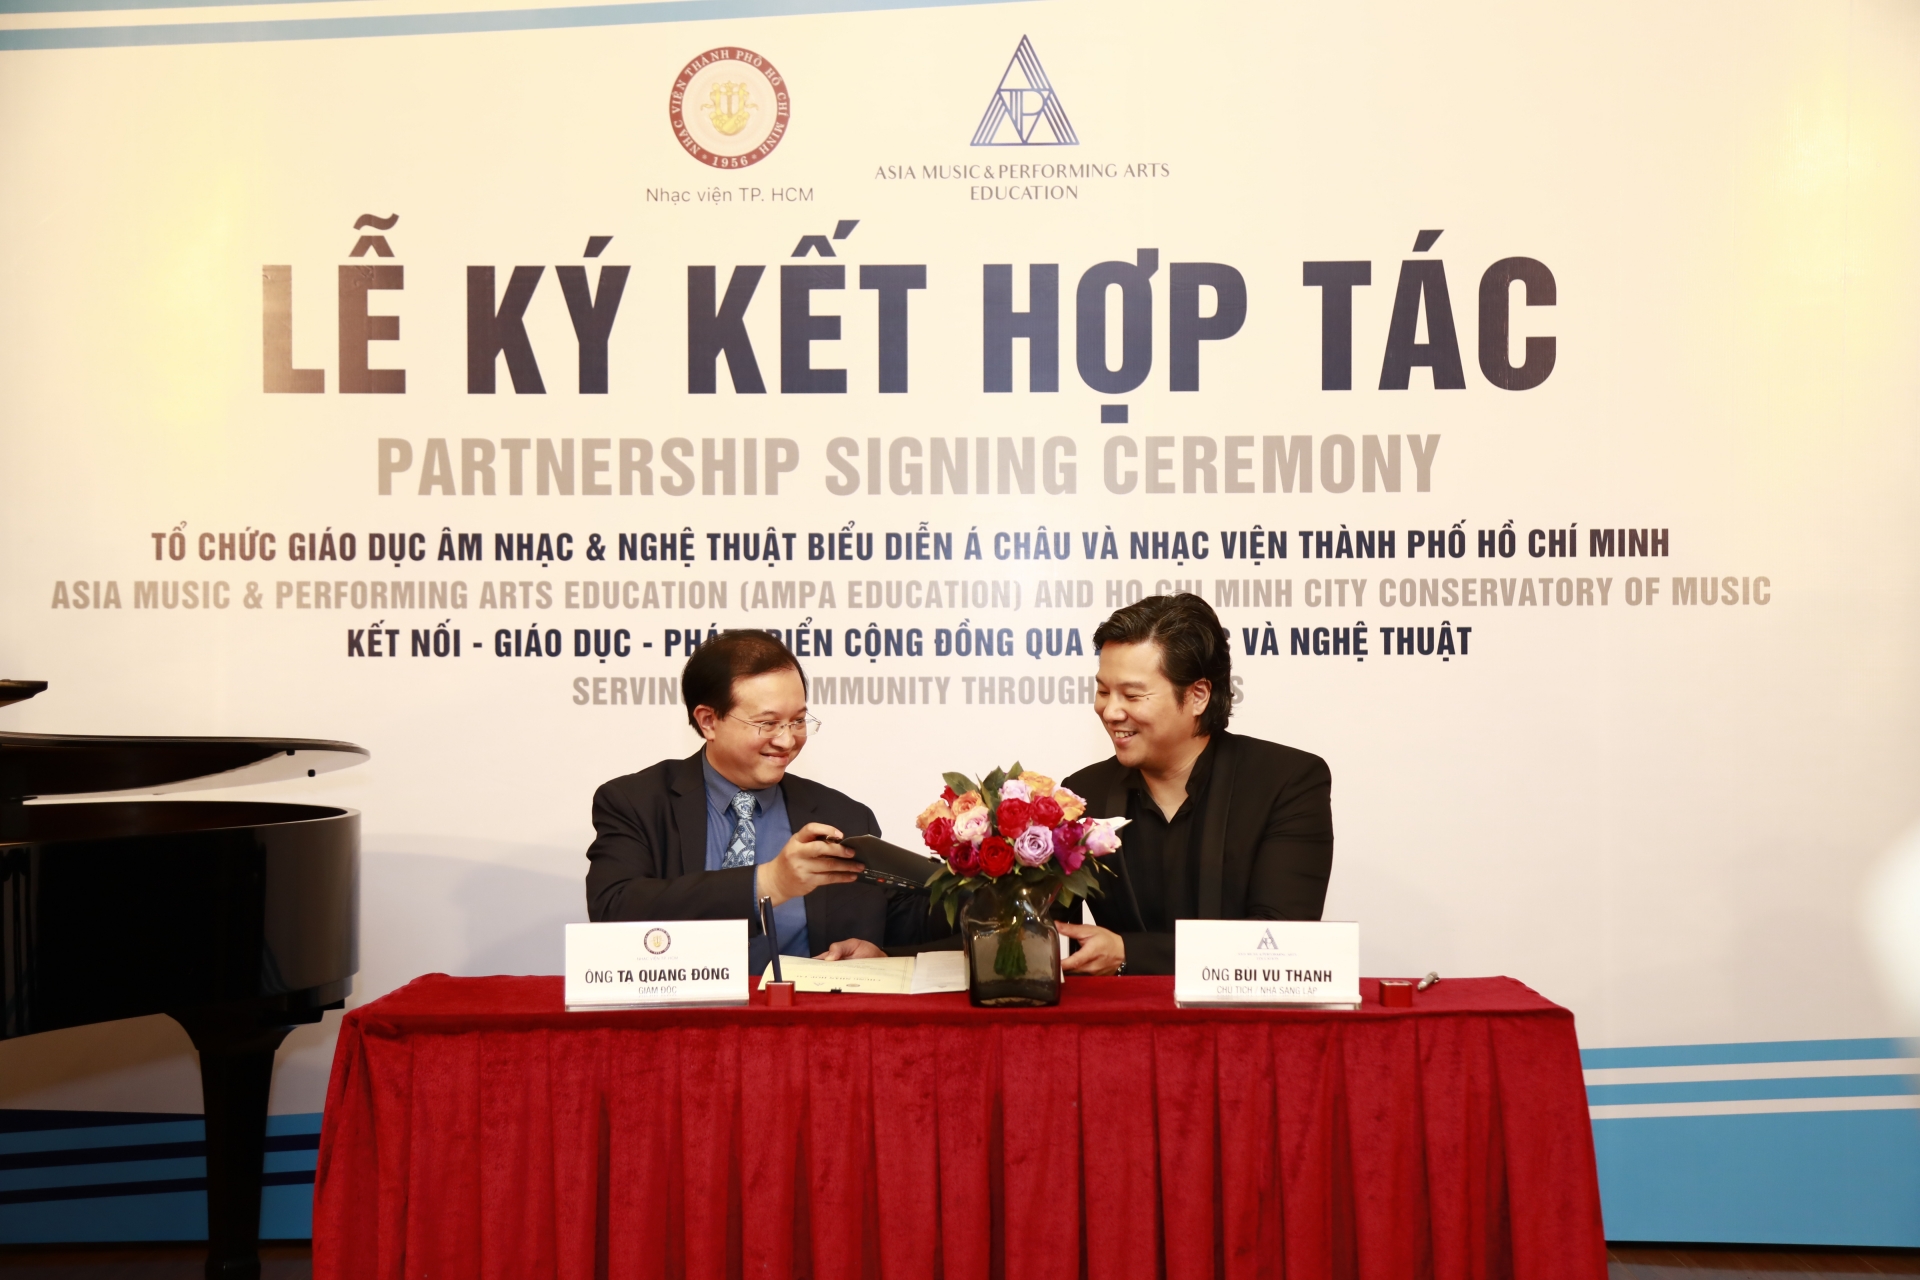 Ho Chi Minh City Conservatory and AMPA Education sign partnership